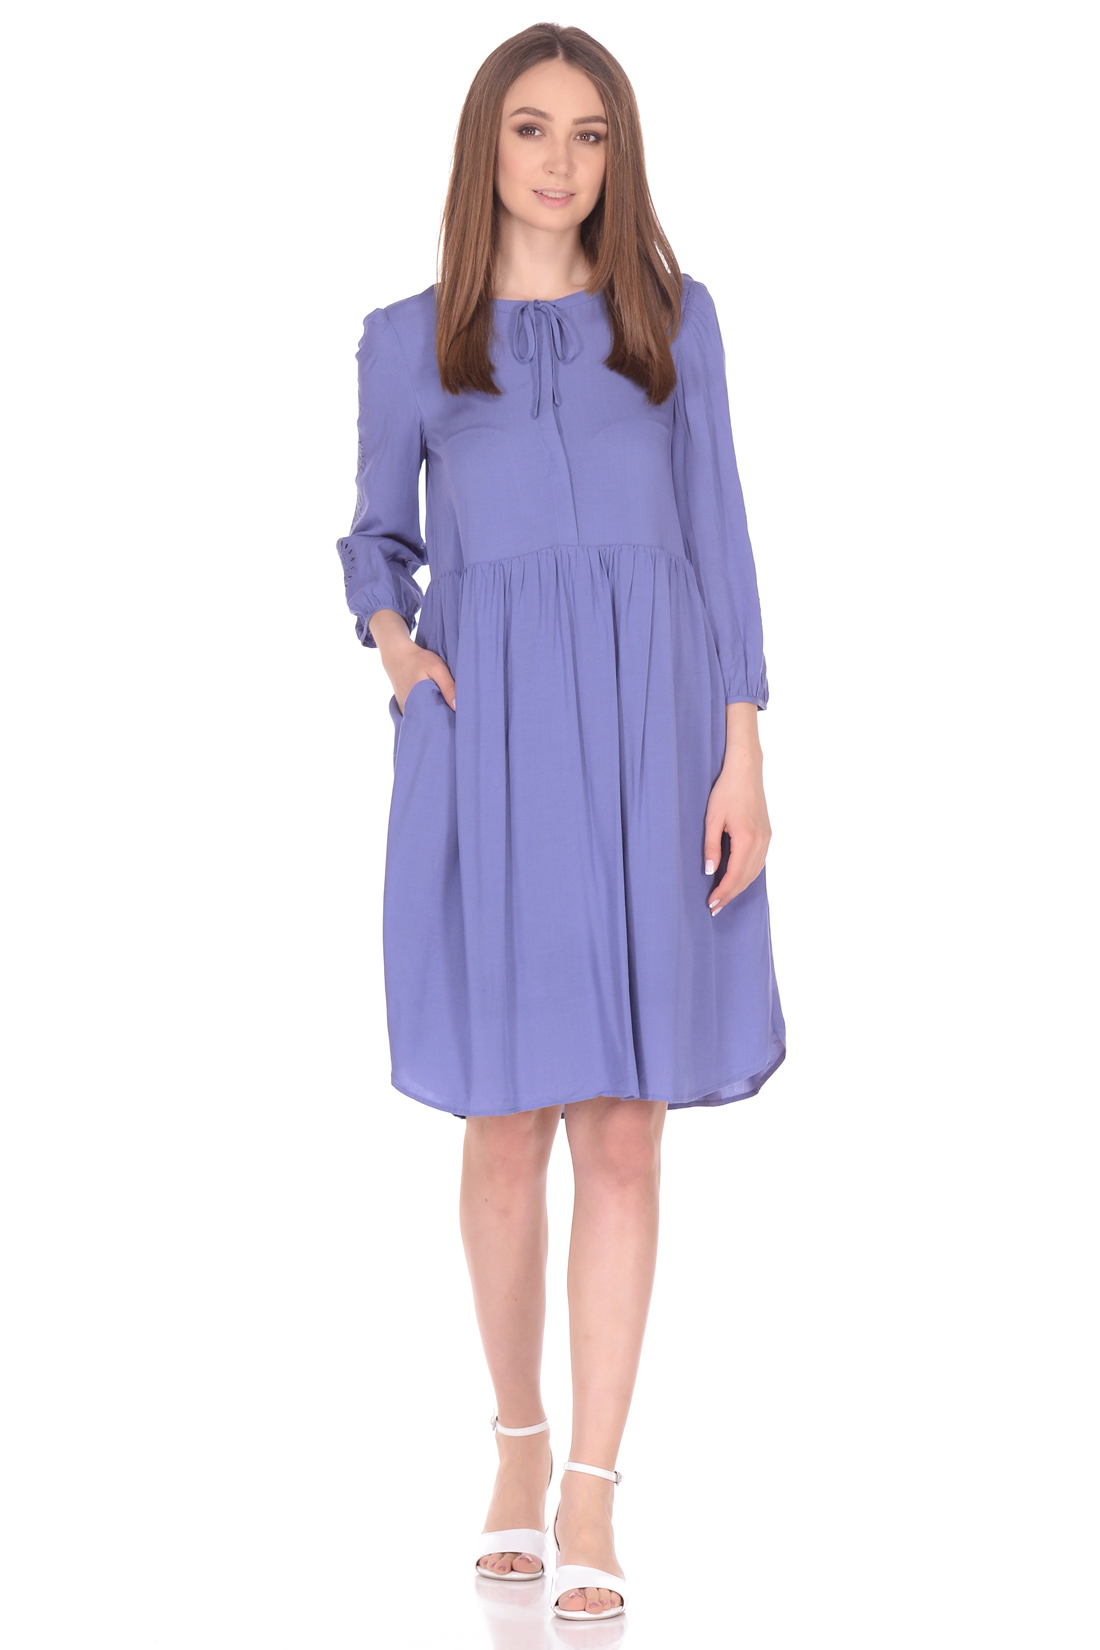 Платье с кружевным узором на рукавах (арт. baon B458096), размер S, цвет синий Платье с кружевным узором на рукавах (арт. baon B458096) - фото 1